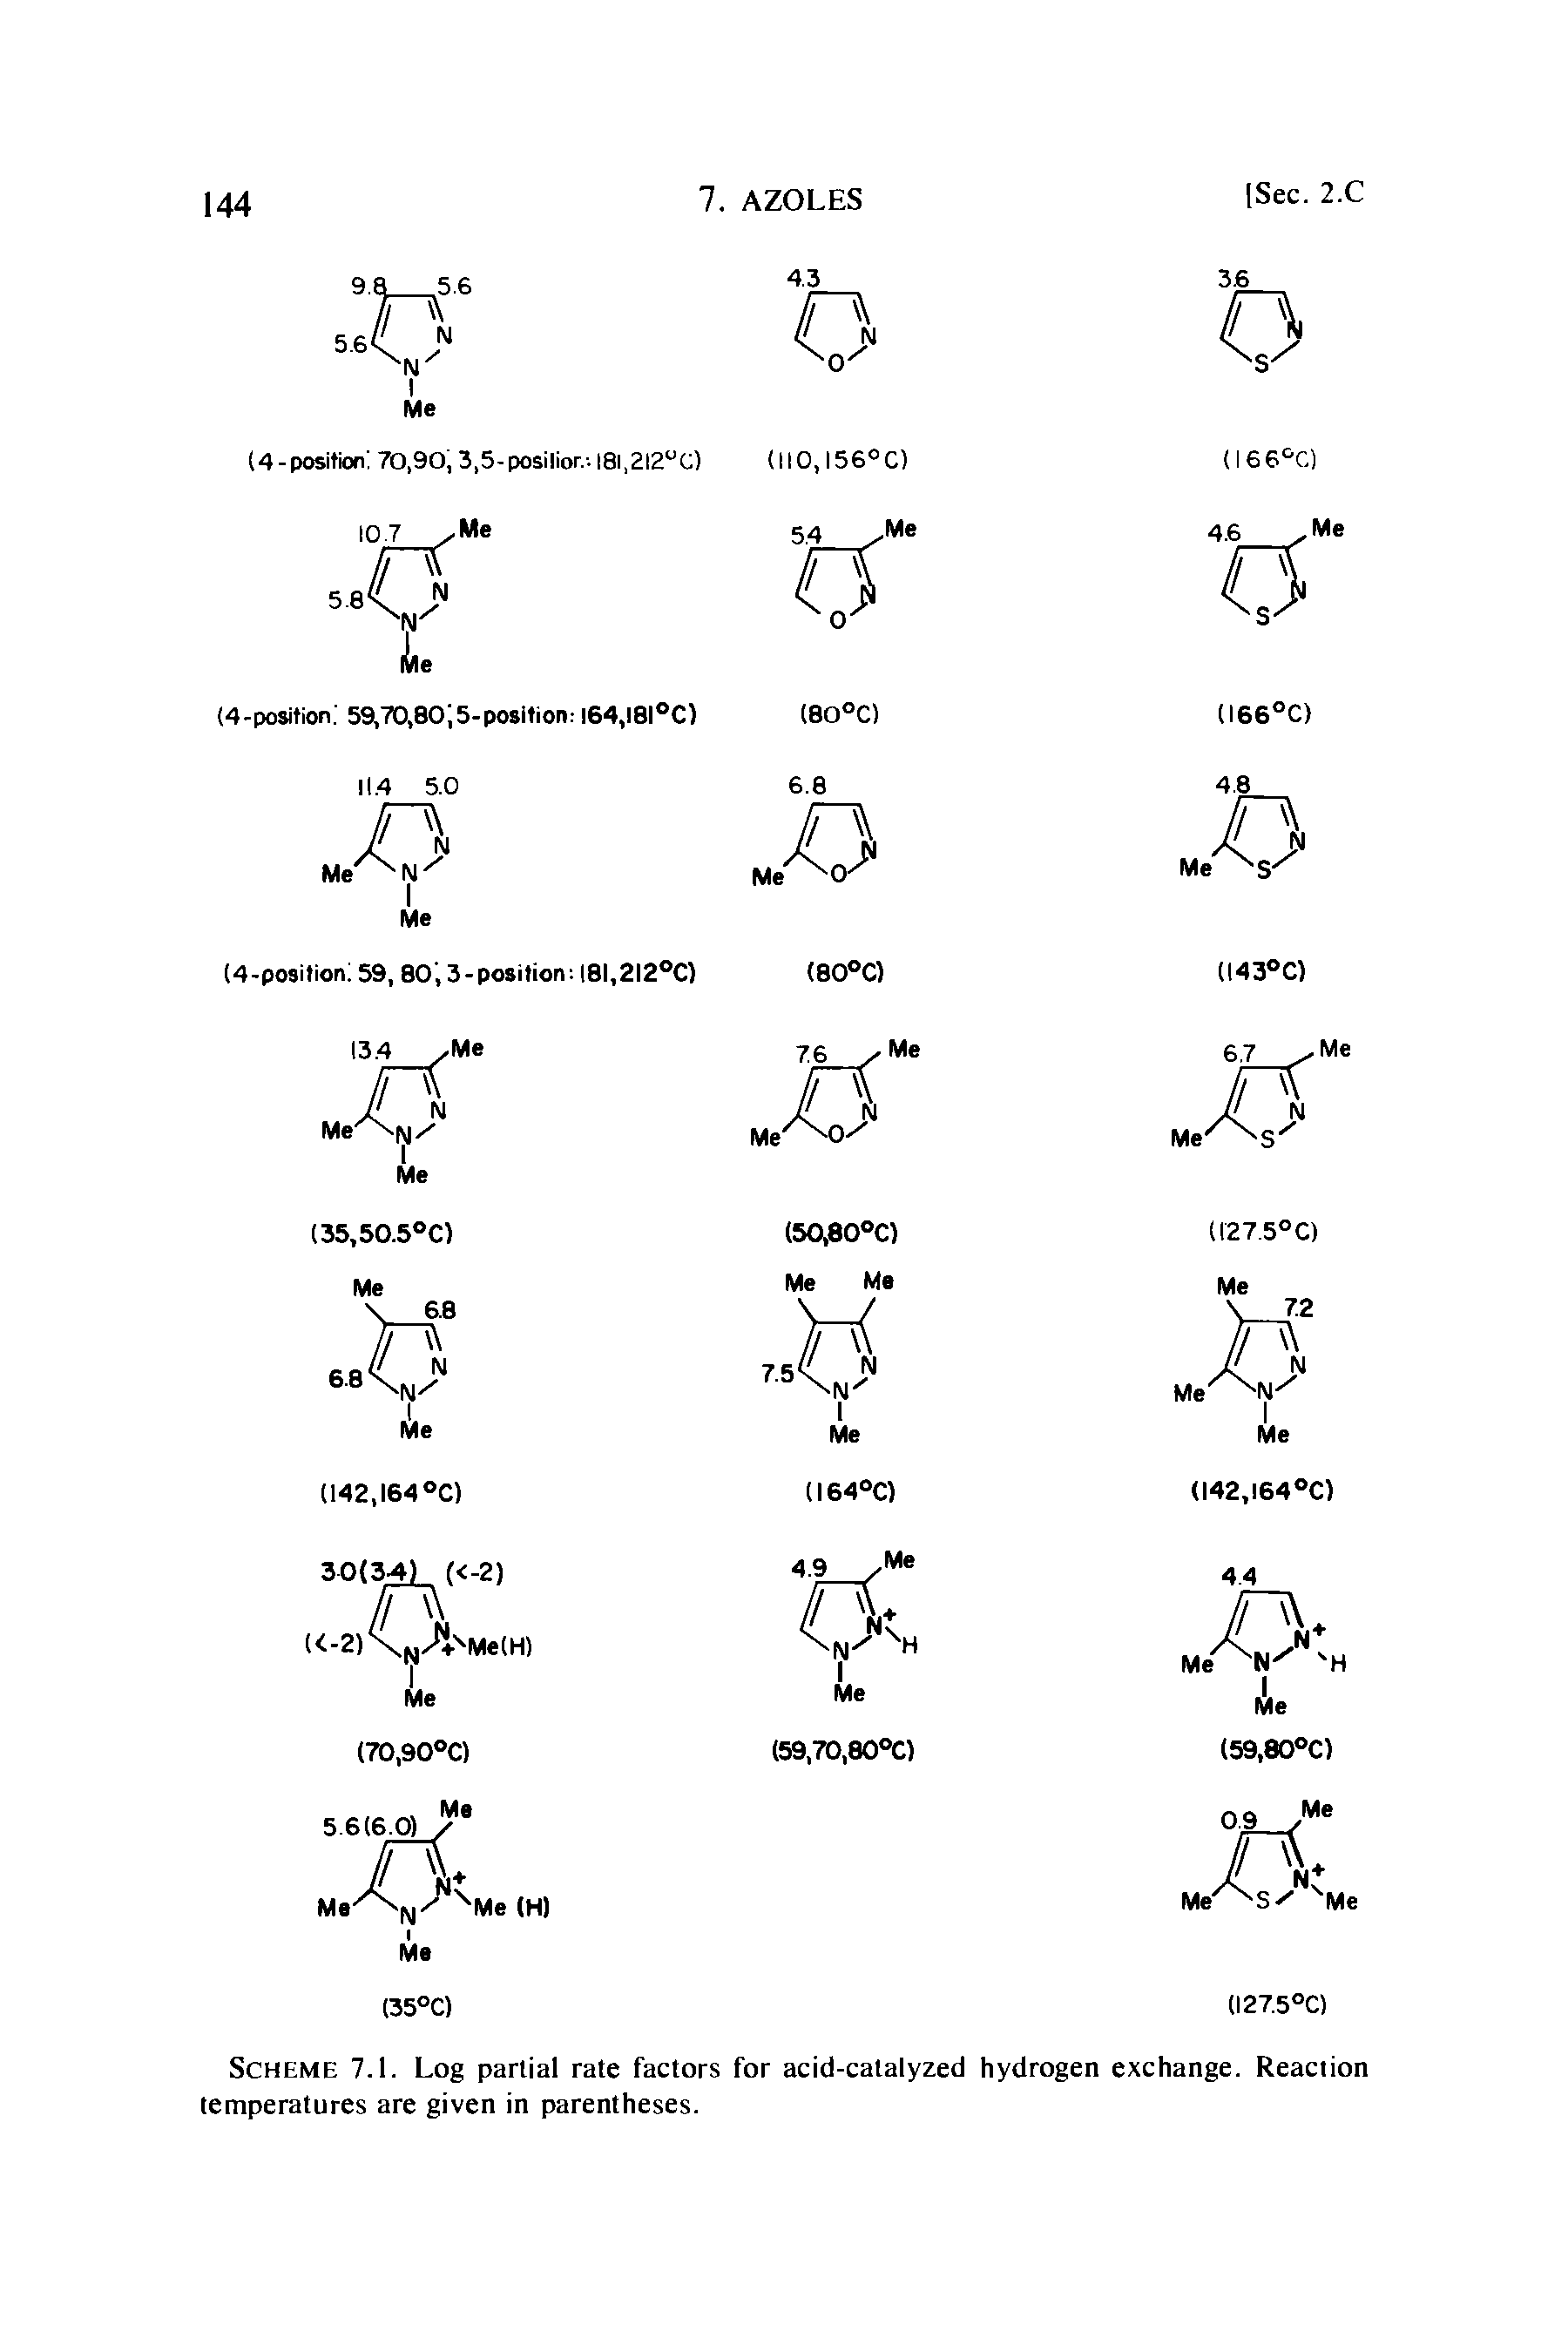 Scheme 7.1. Log partial rate factors for acid-catalyzed hydrogen exchange. Reaction temperatures are given in parentheses.